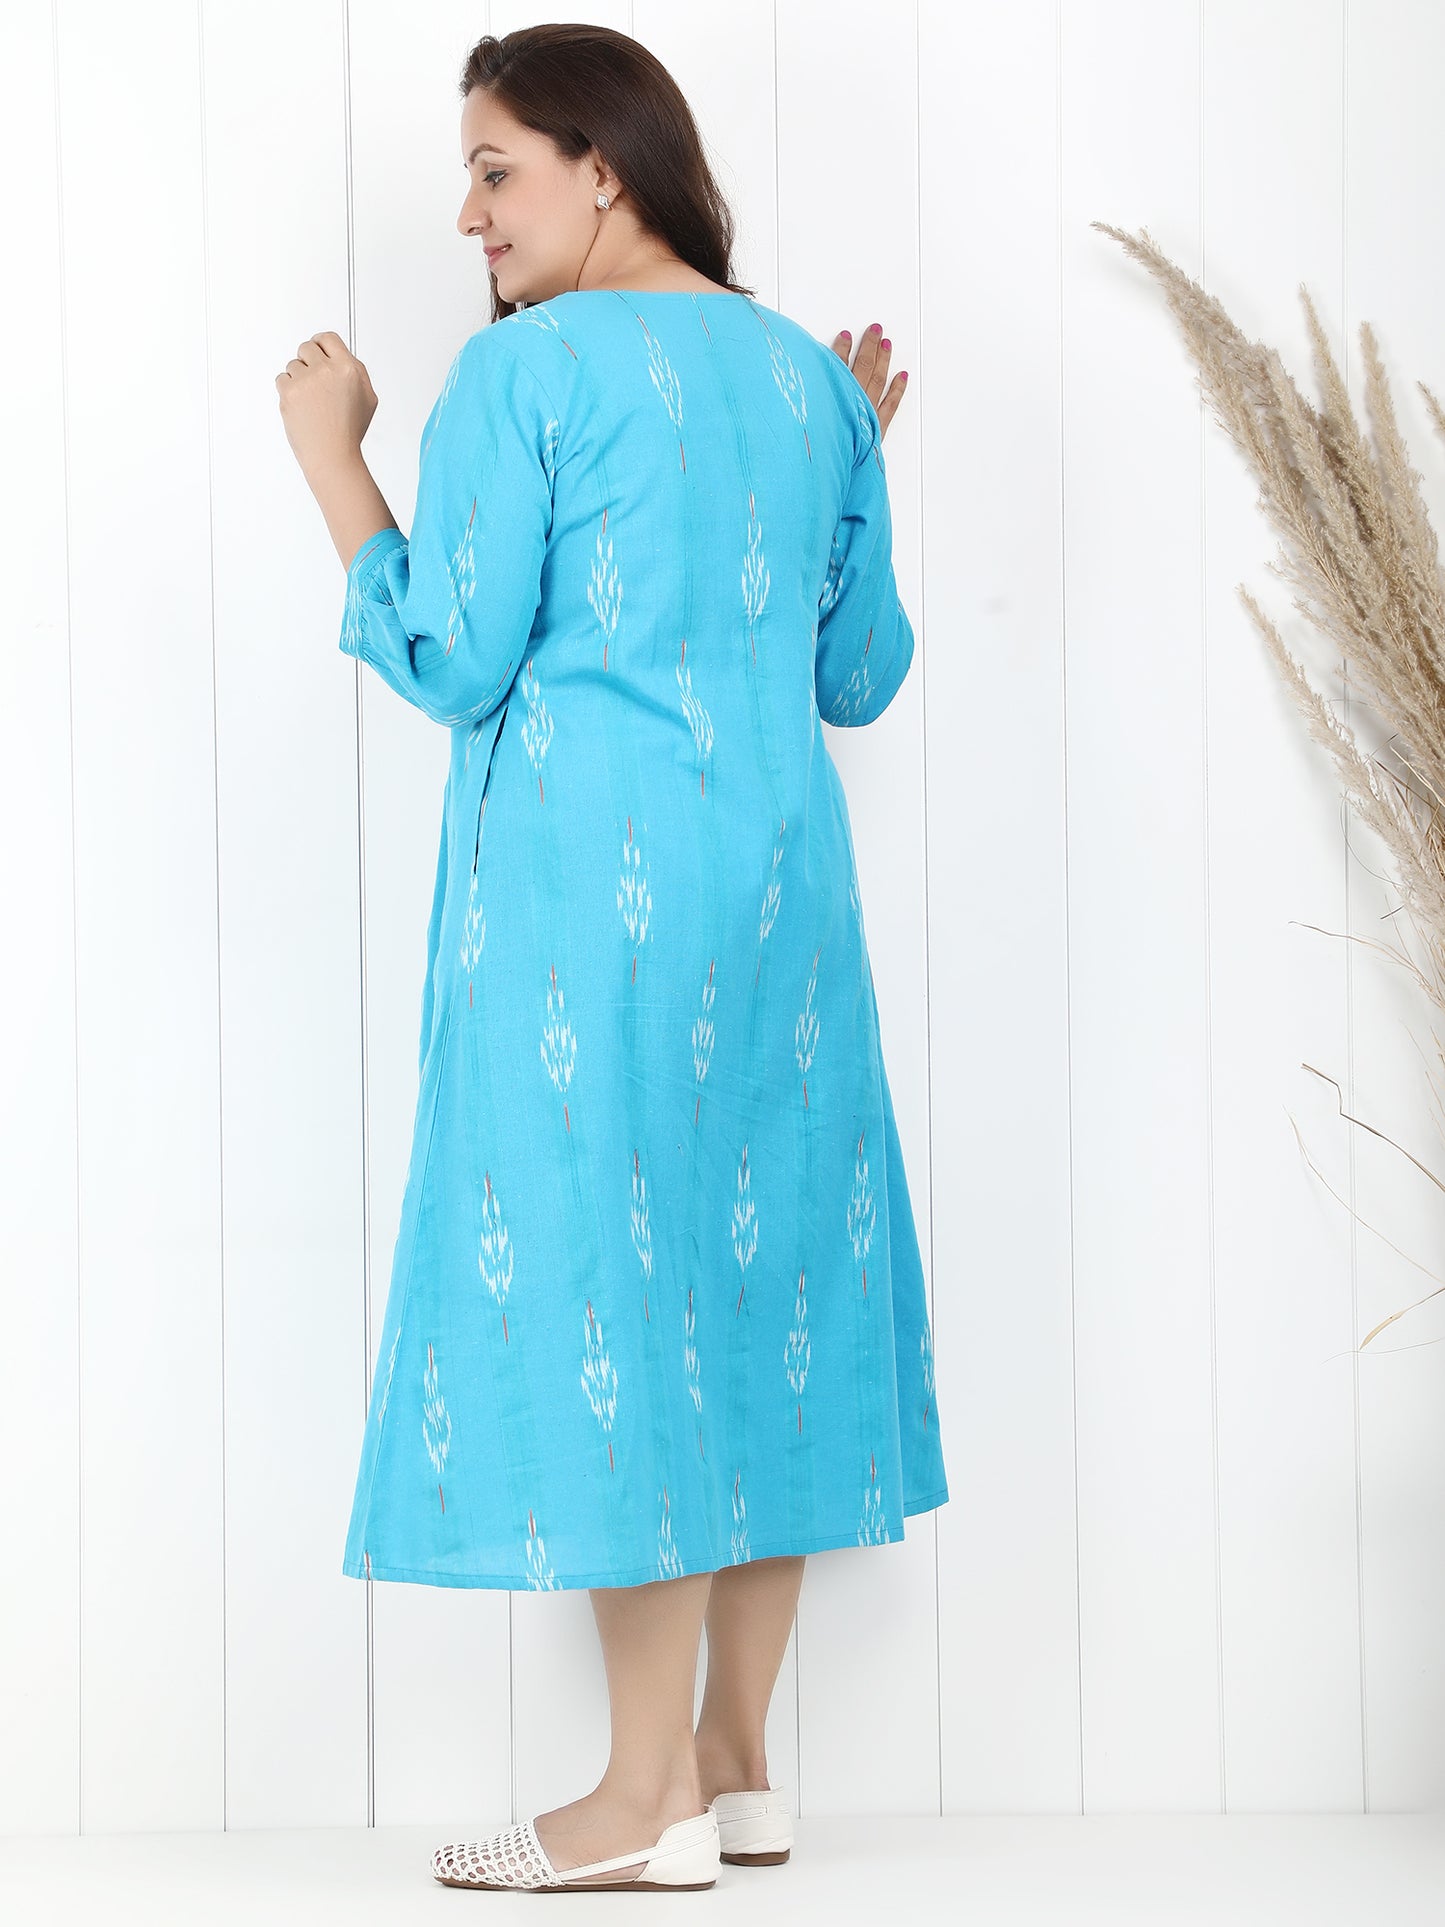 Blue Ikkat cotton yoke dress